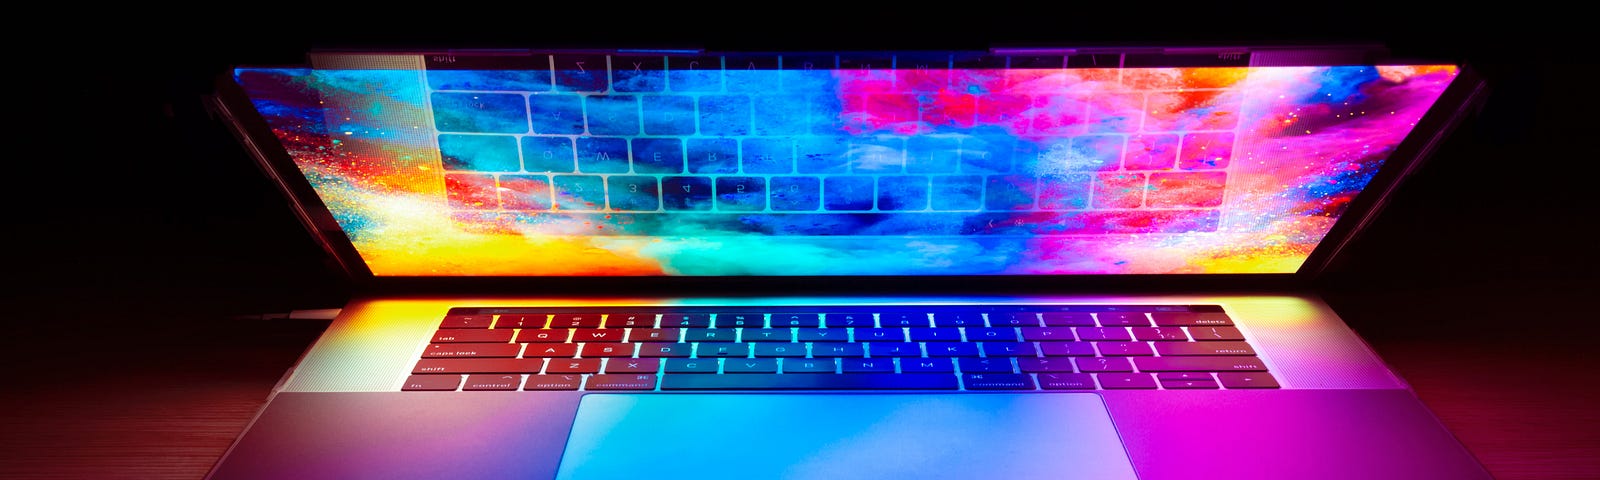 colorful laptop to publish